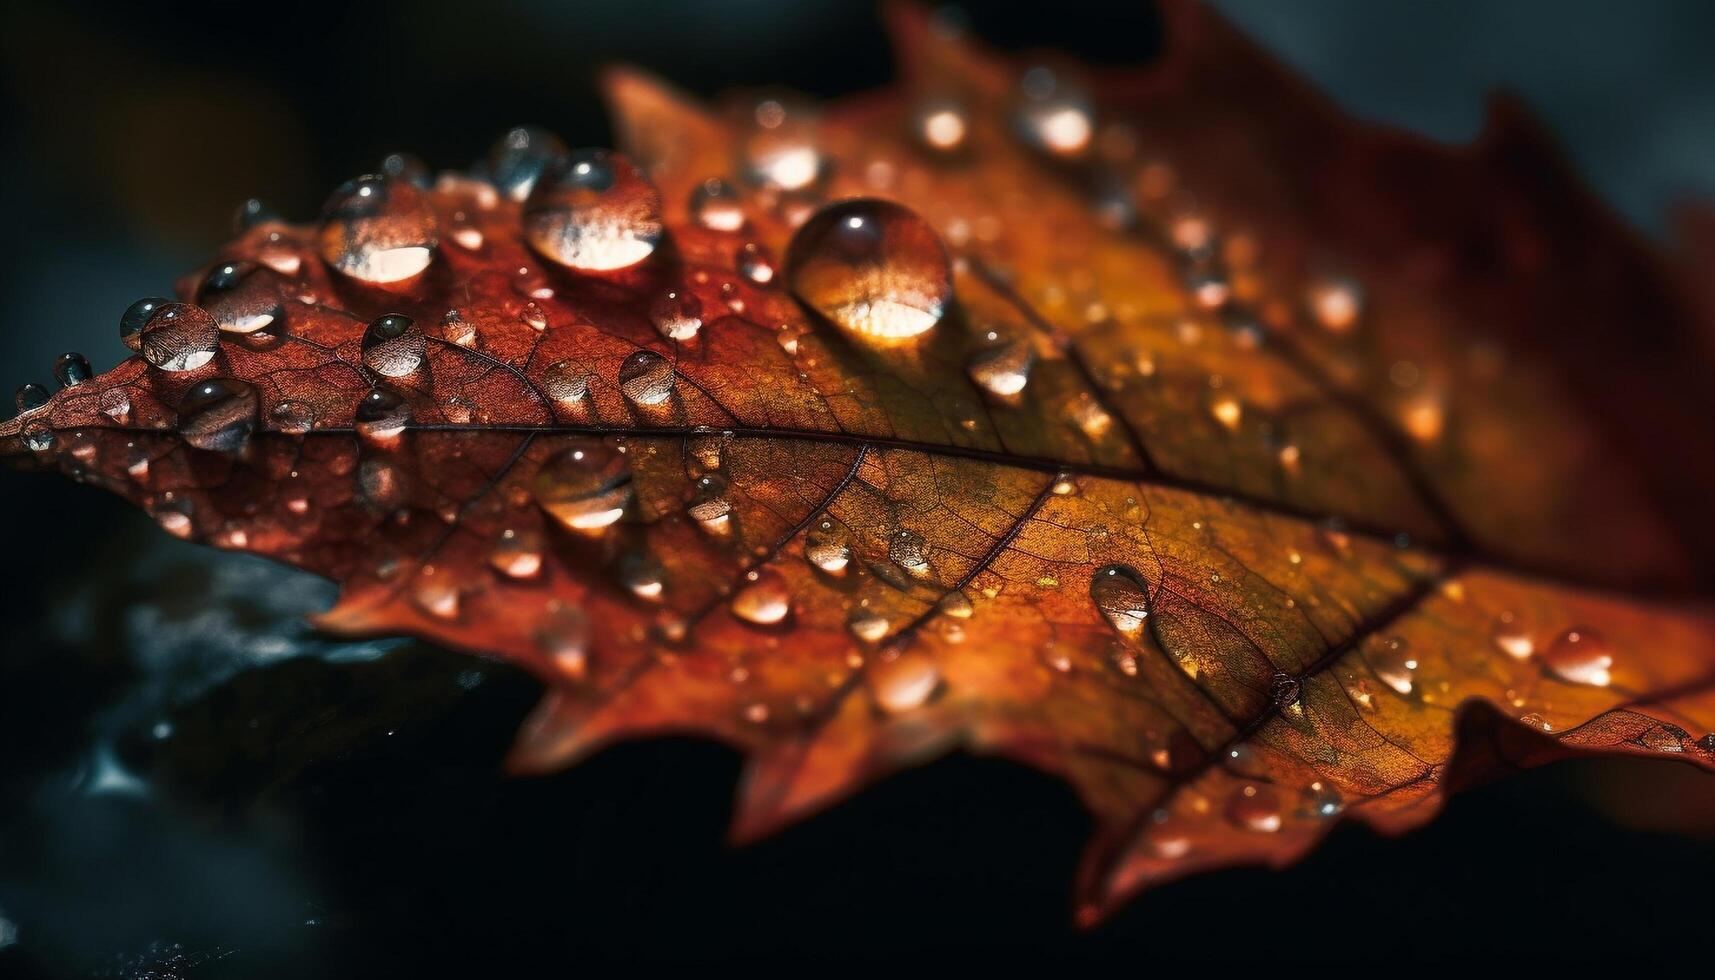 vibrante outono folha reflete beleza dentro natureza molhado meio Ambiente gerado de ai foto